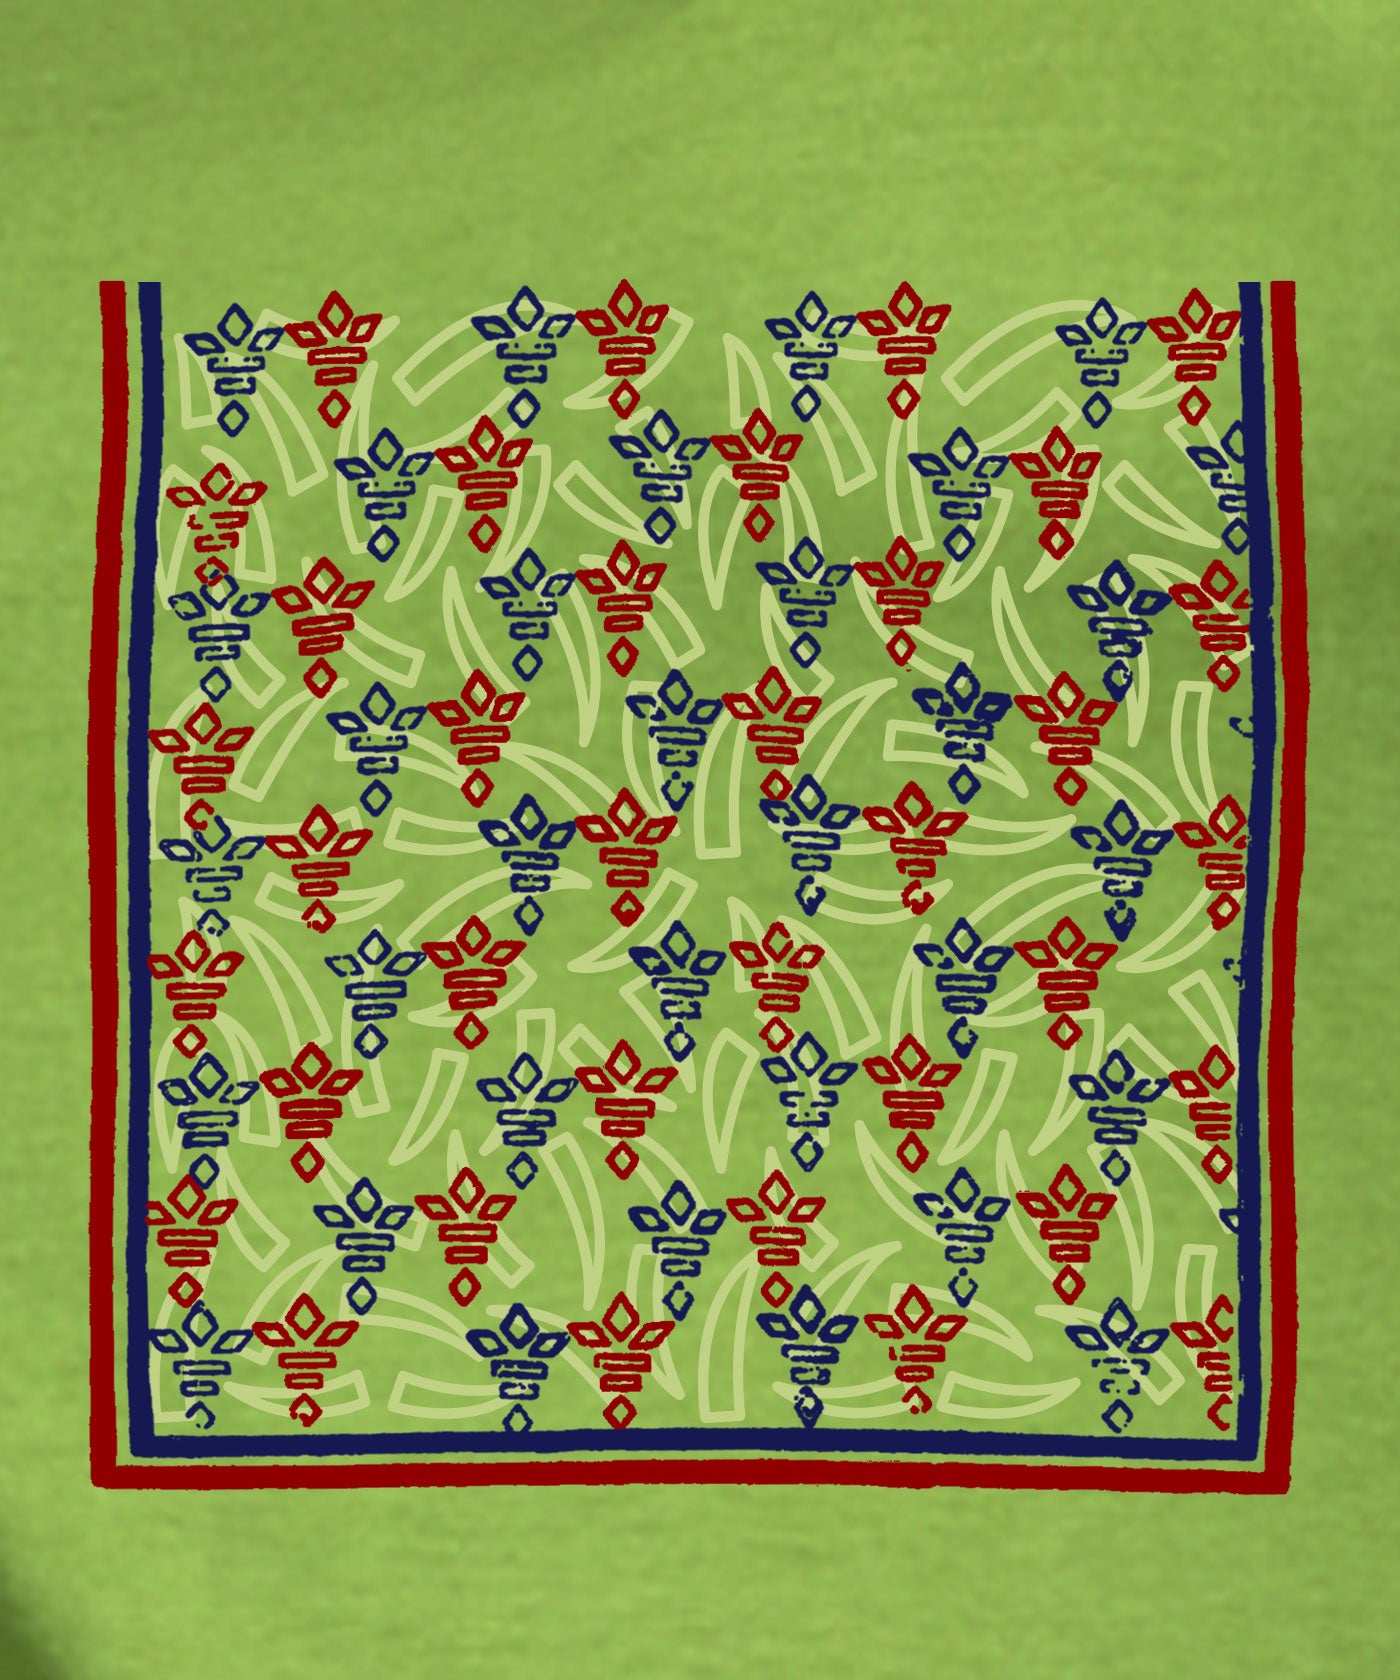 Elephant Border - Block Print Tees for Women - Parrot Green